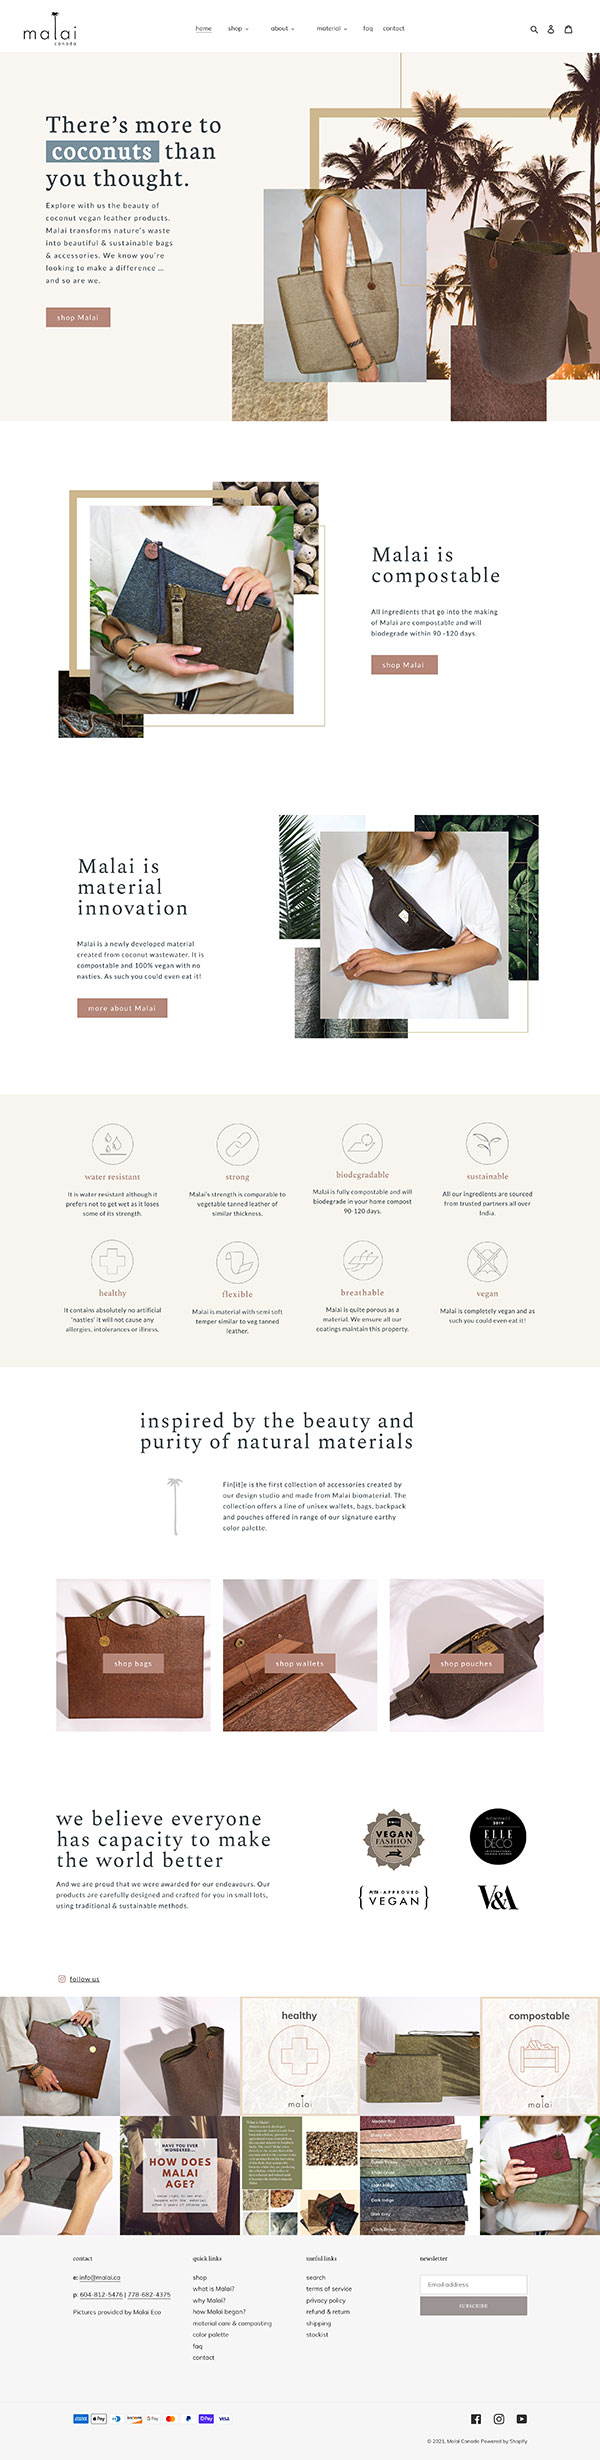 Professional Web Design Of Shopify E-Commerce Website For Malai Canada By Idea Marketing - Vancouver Web Design Agency